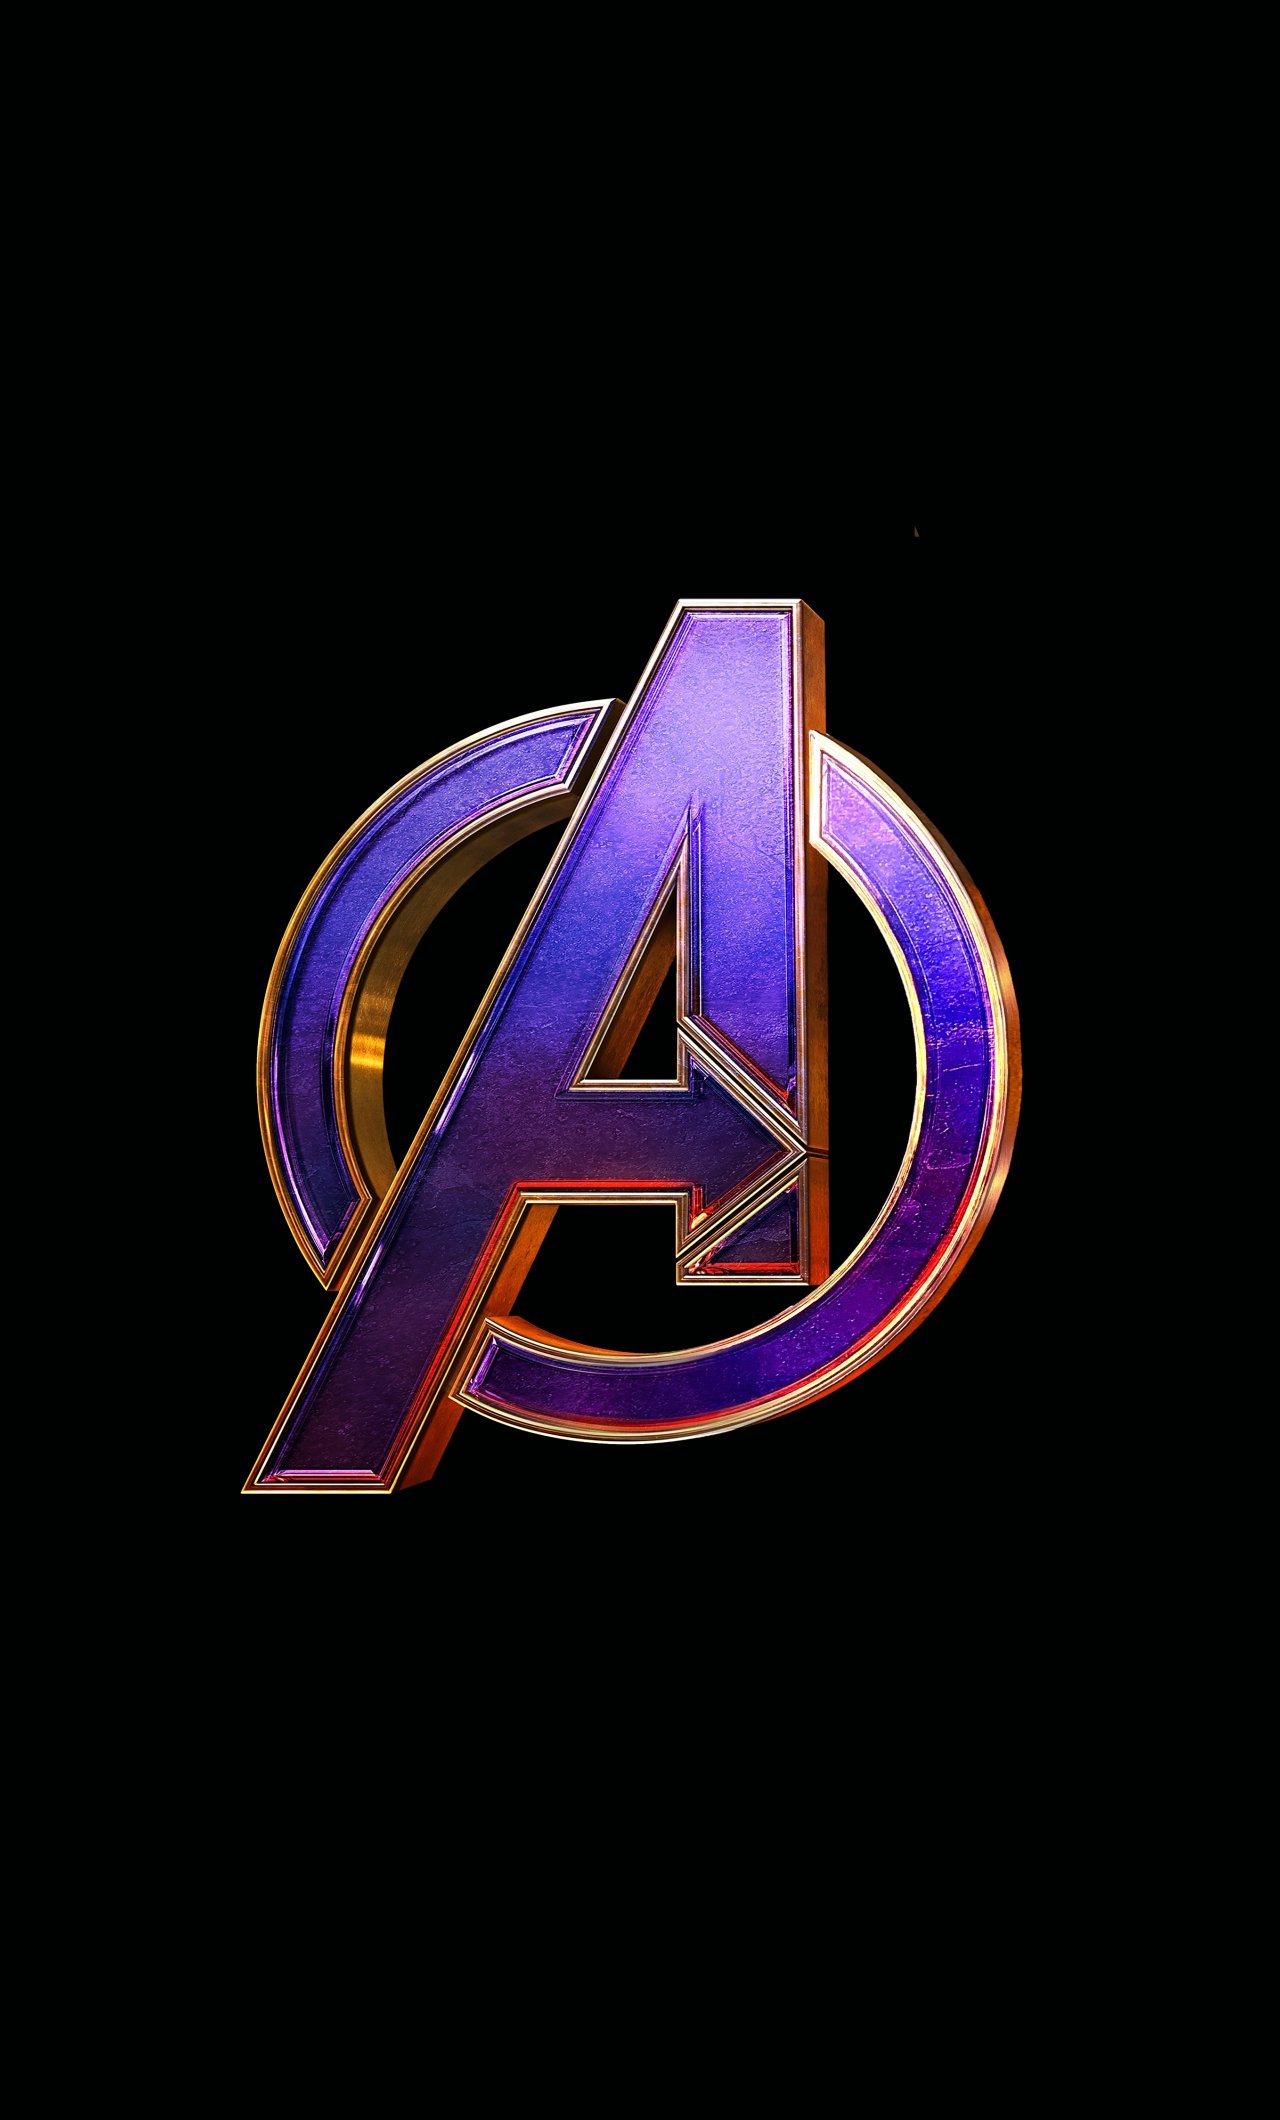 Download avengers: endgame, movie, logo 1280x2120 wallpaper, iphone 6 plus, 1280x2120 HD image, background, 20787